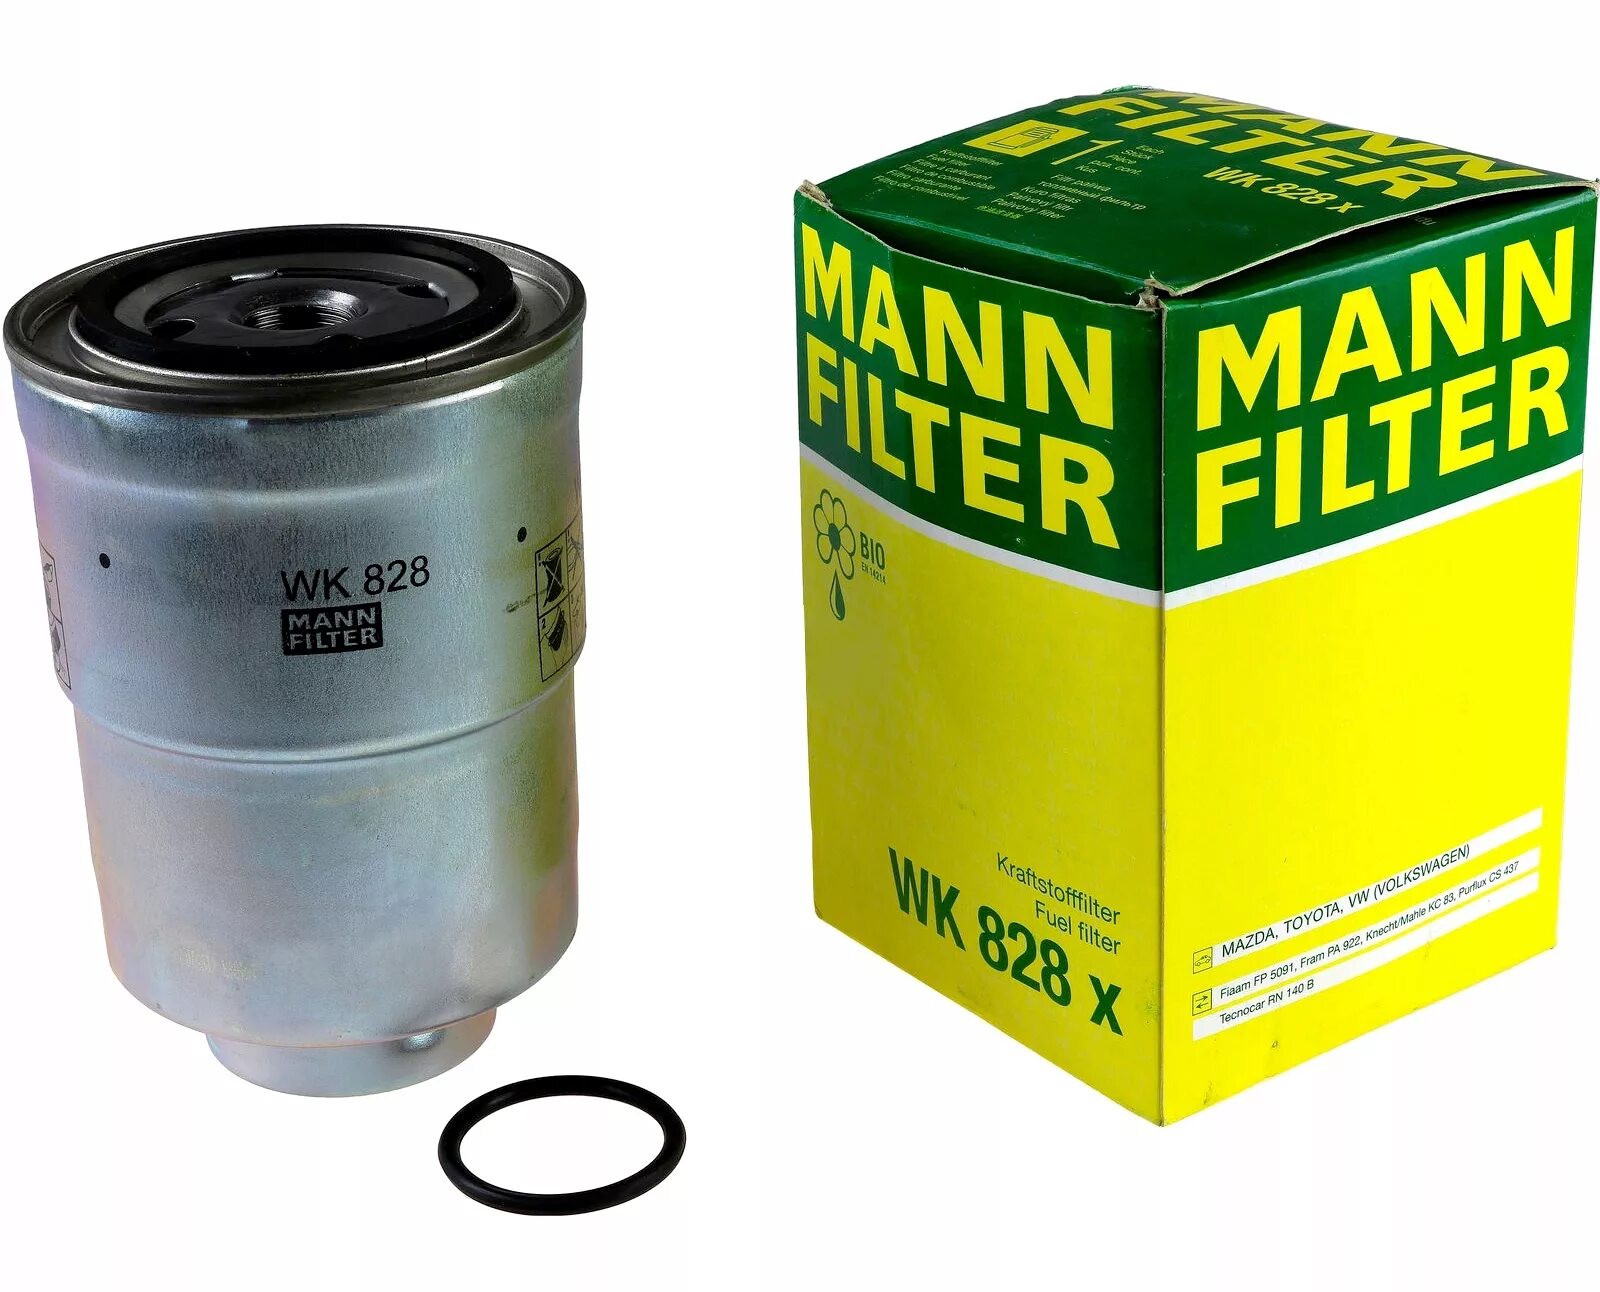 Mann фильтр оригинал. WK 828 X Применяемость. Mann-Filter WK 828 X фильтр топливный. Wk828 (WK 828 Х). Манн фильтр WK 12.